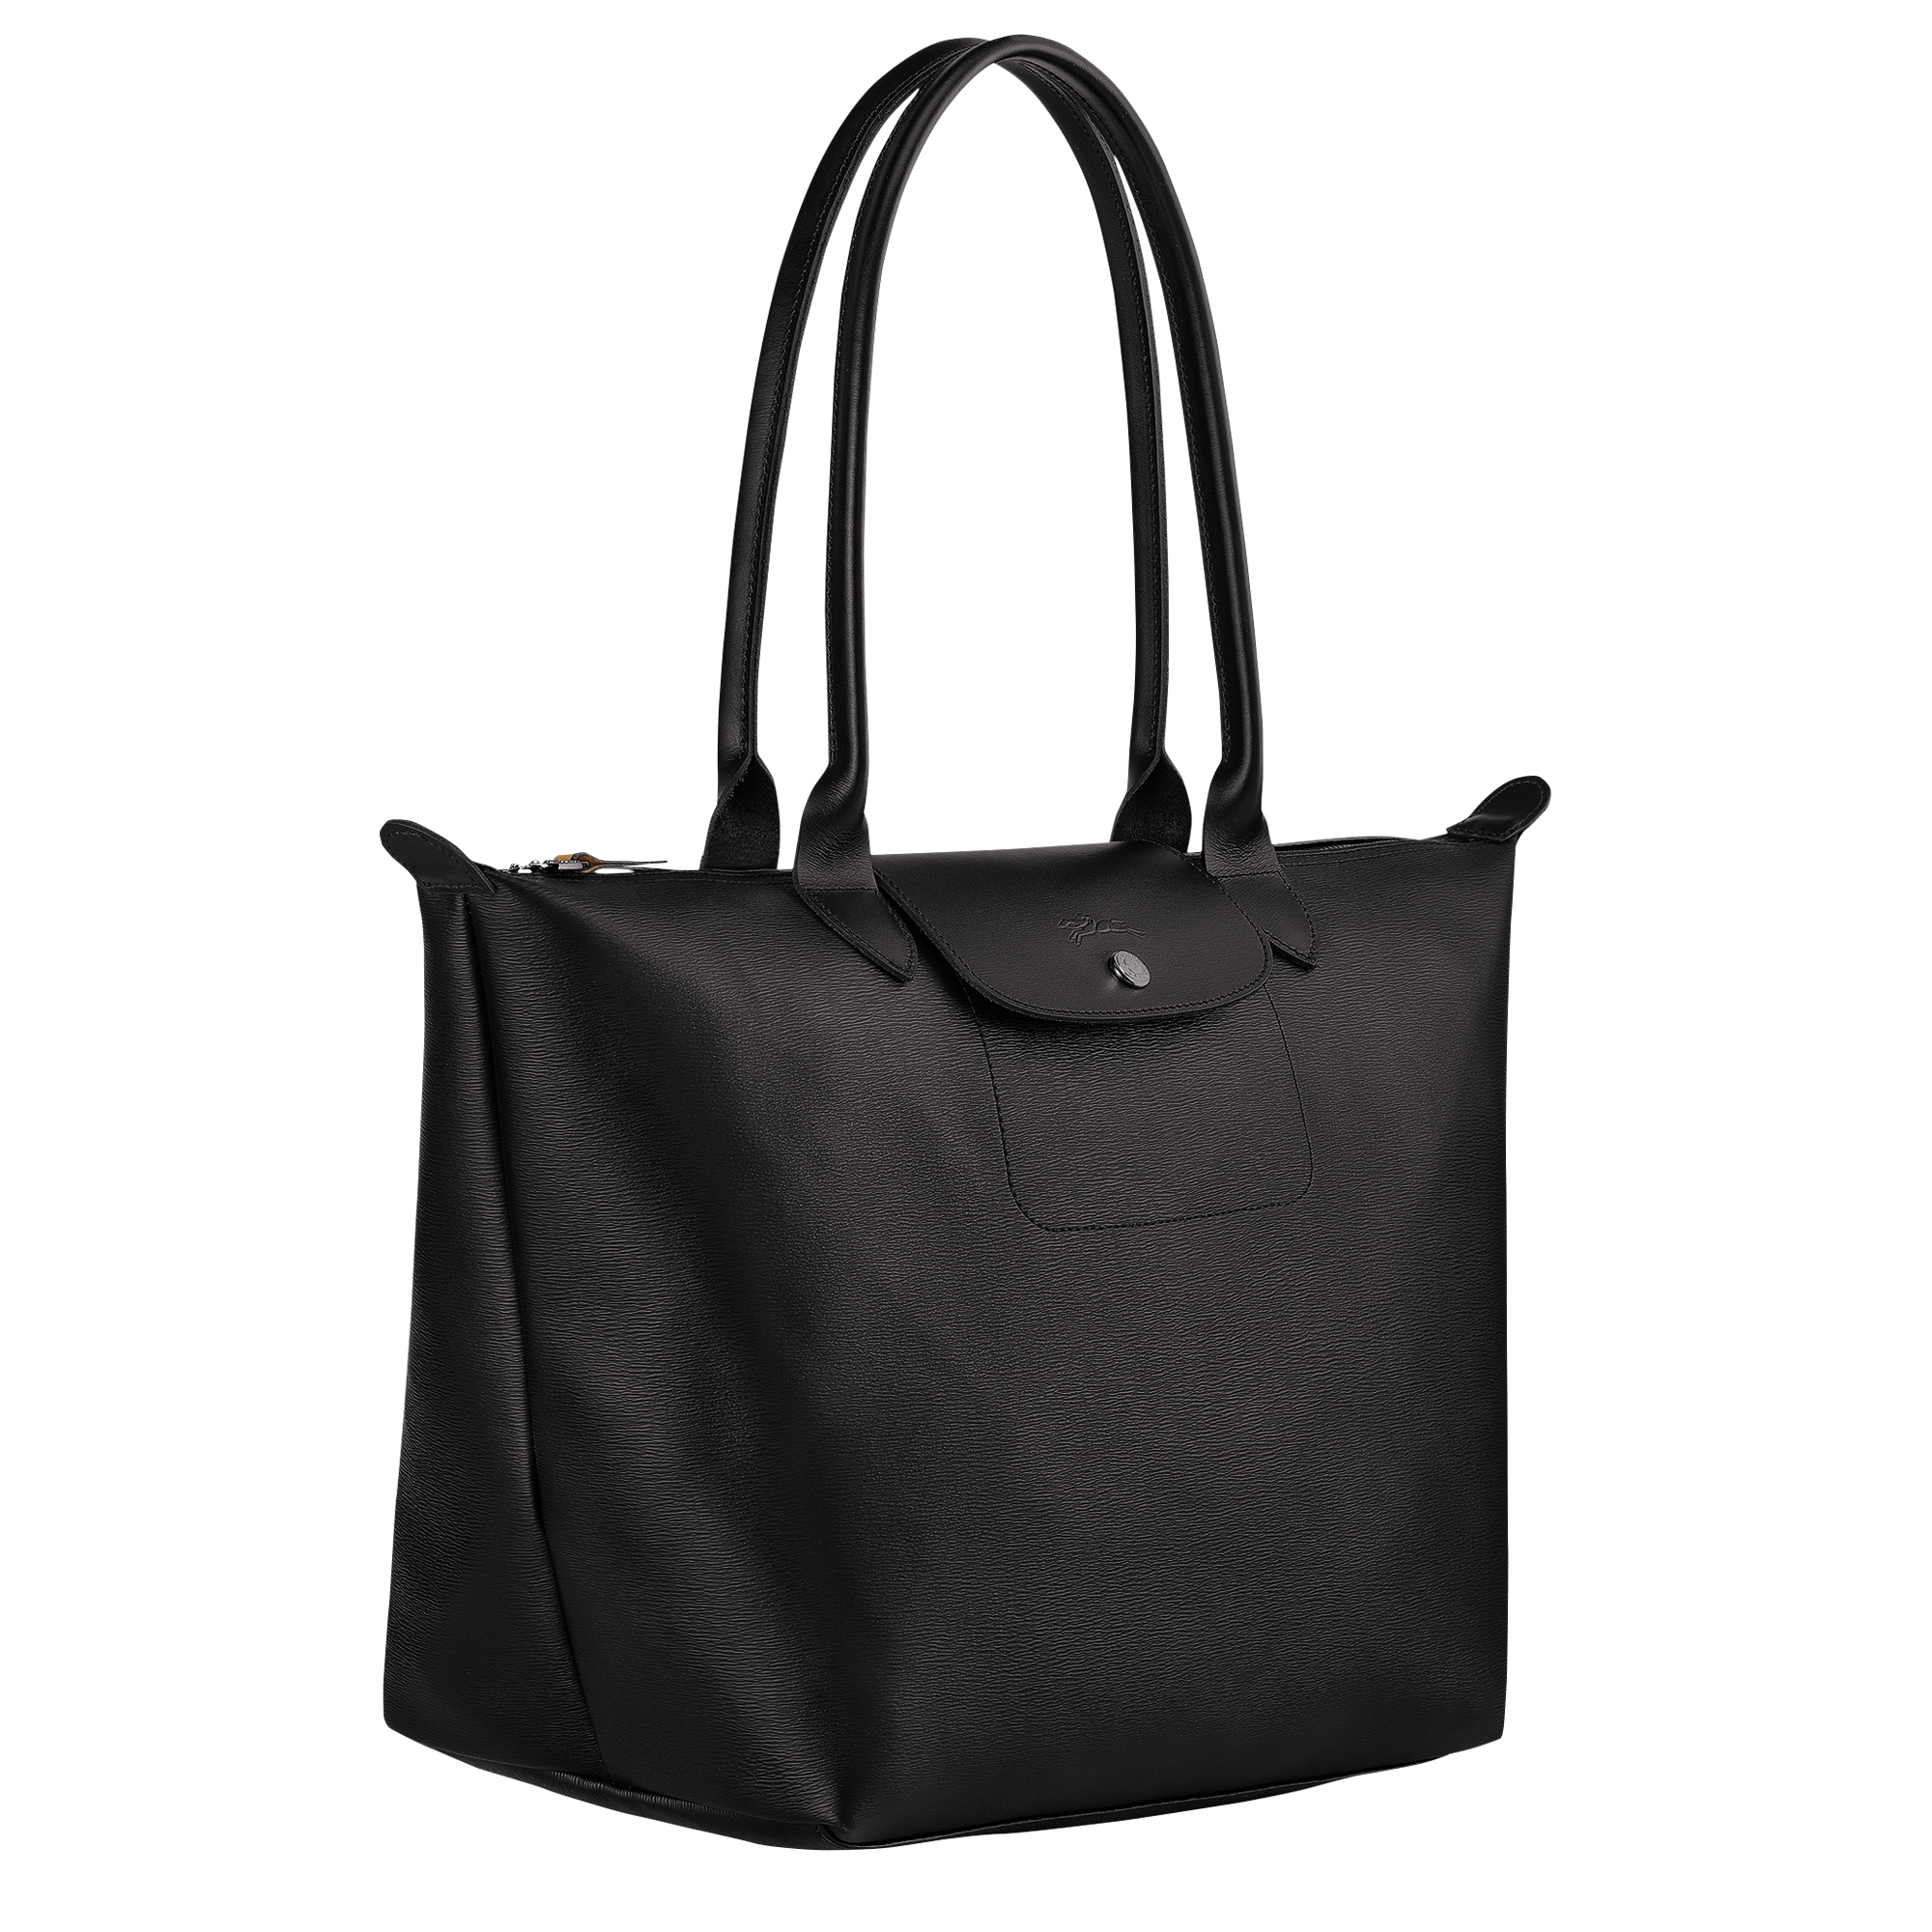 Le Pliage City L Tote bag Black - Canvas (L1899HYQ001)